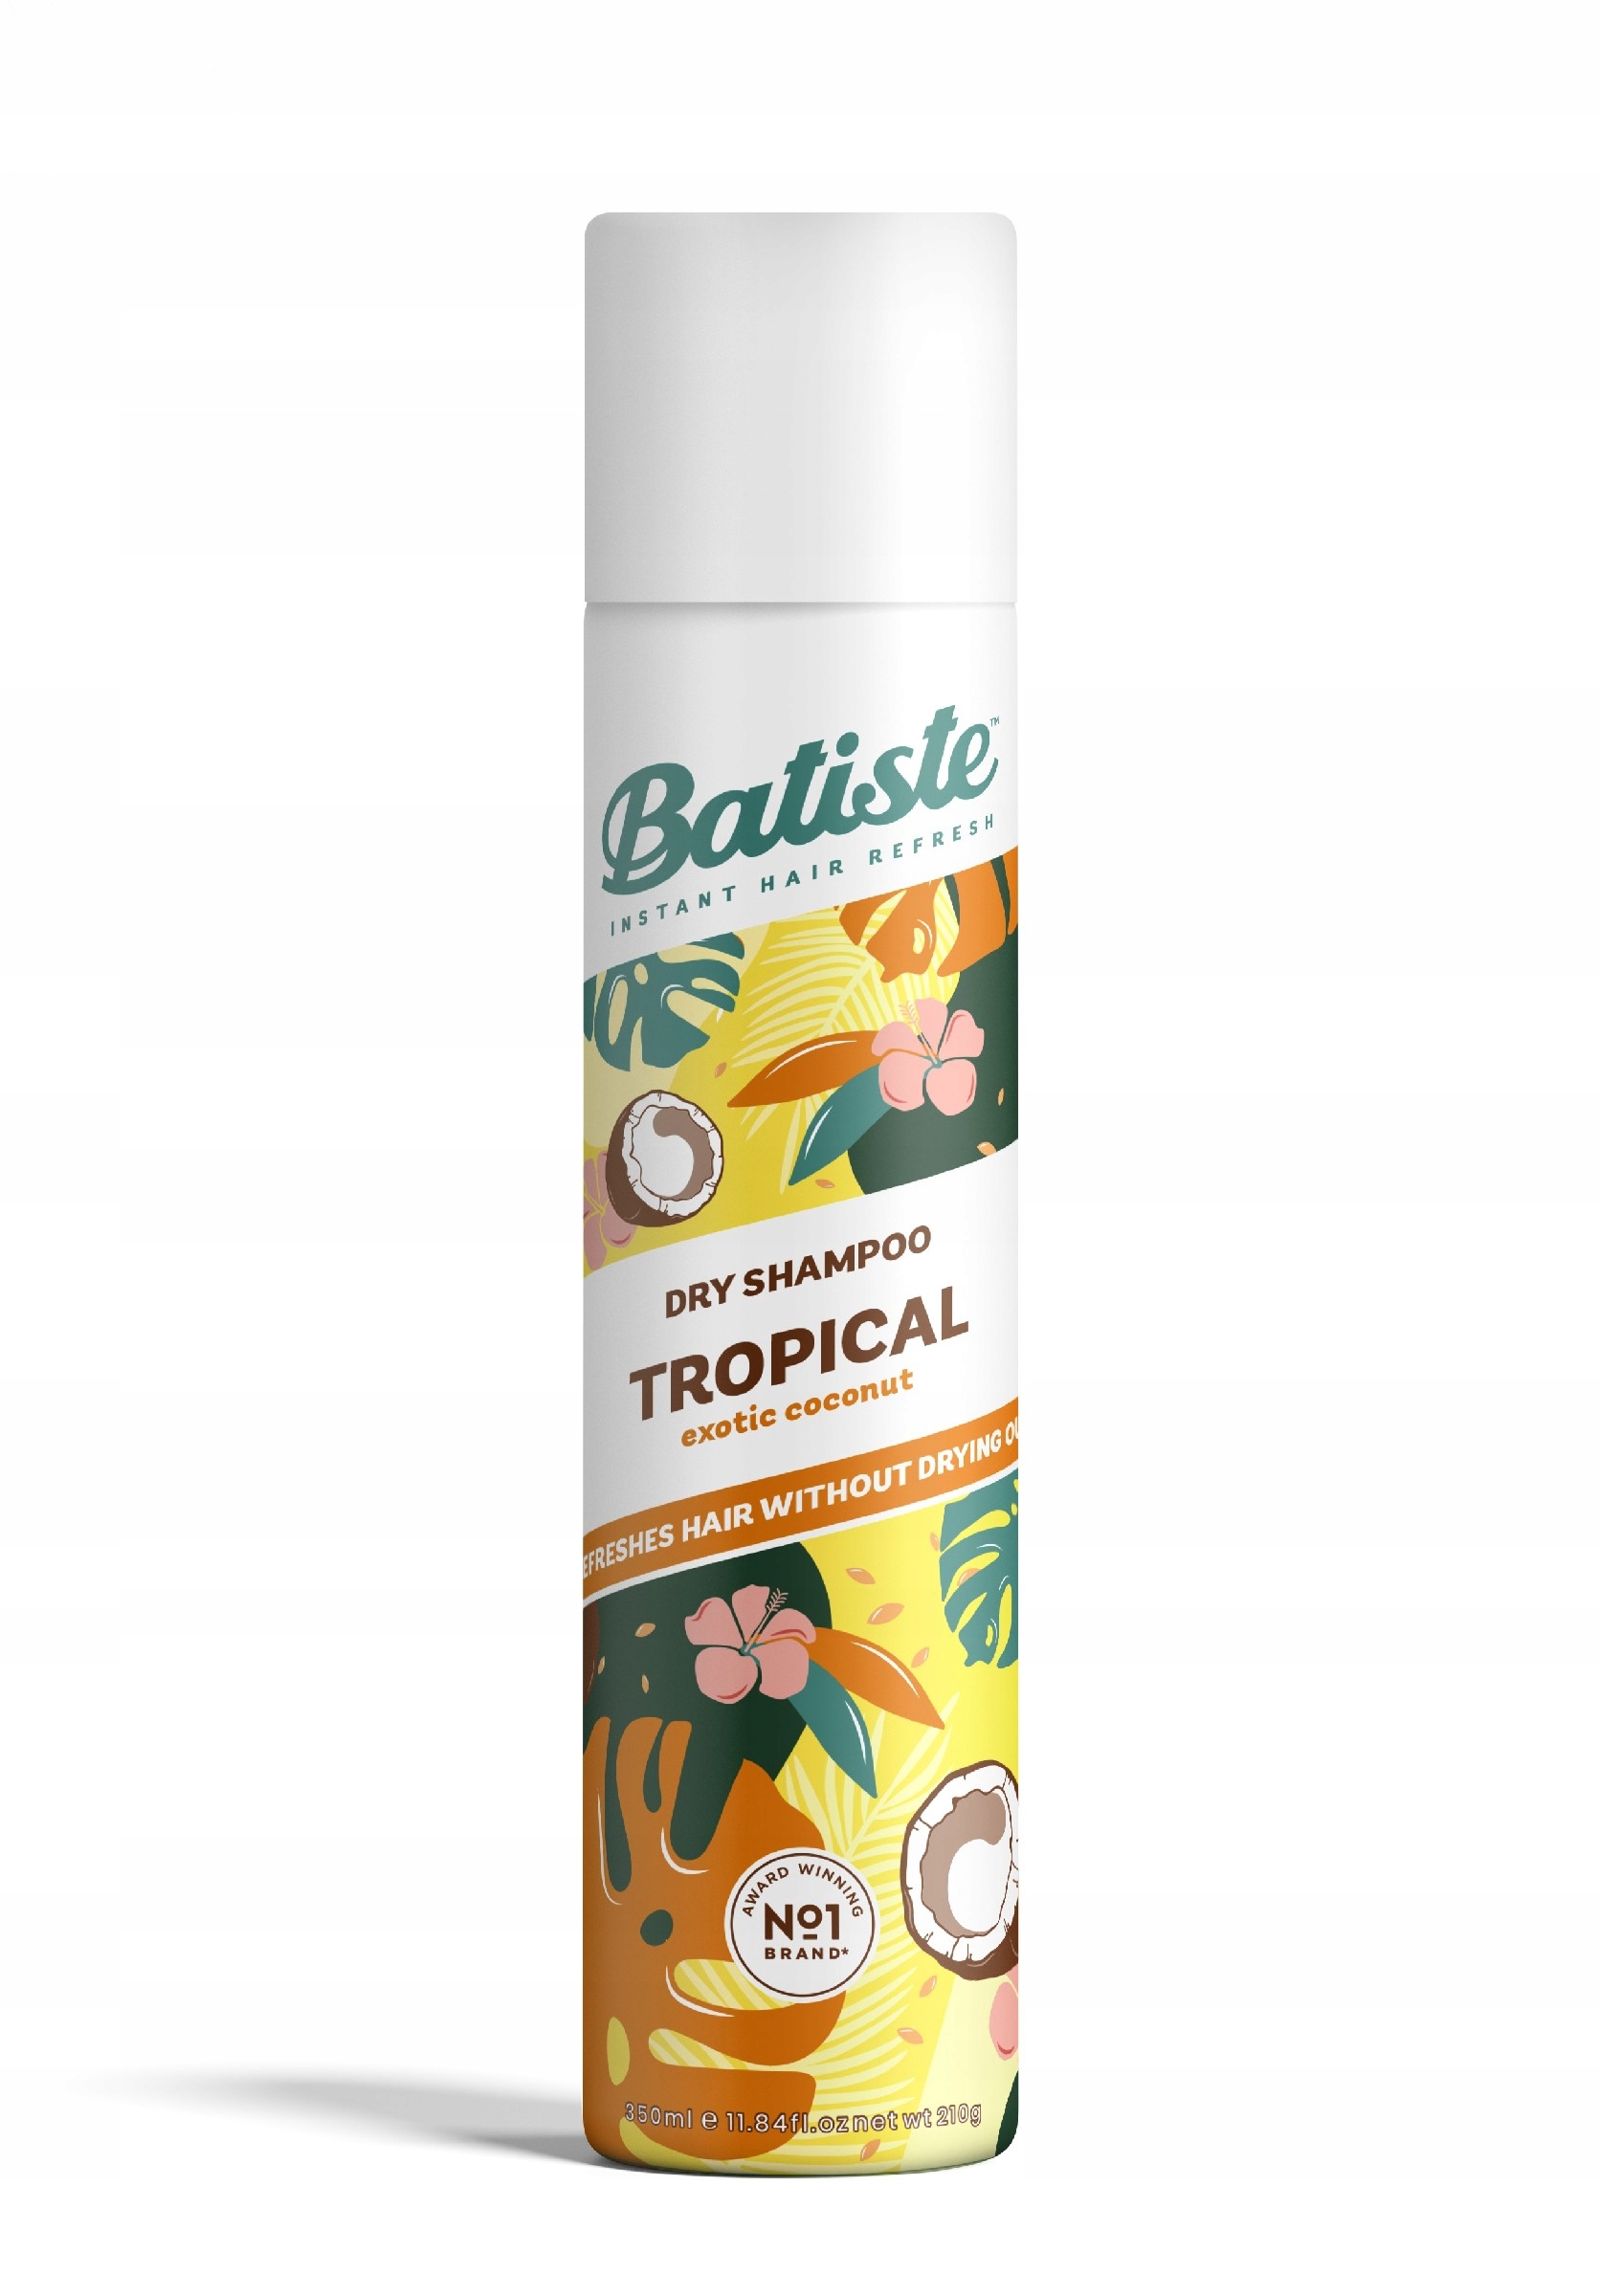 suchy szampon batiste tropical opinie